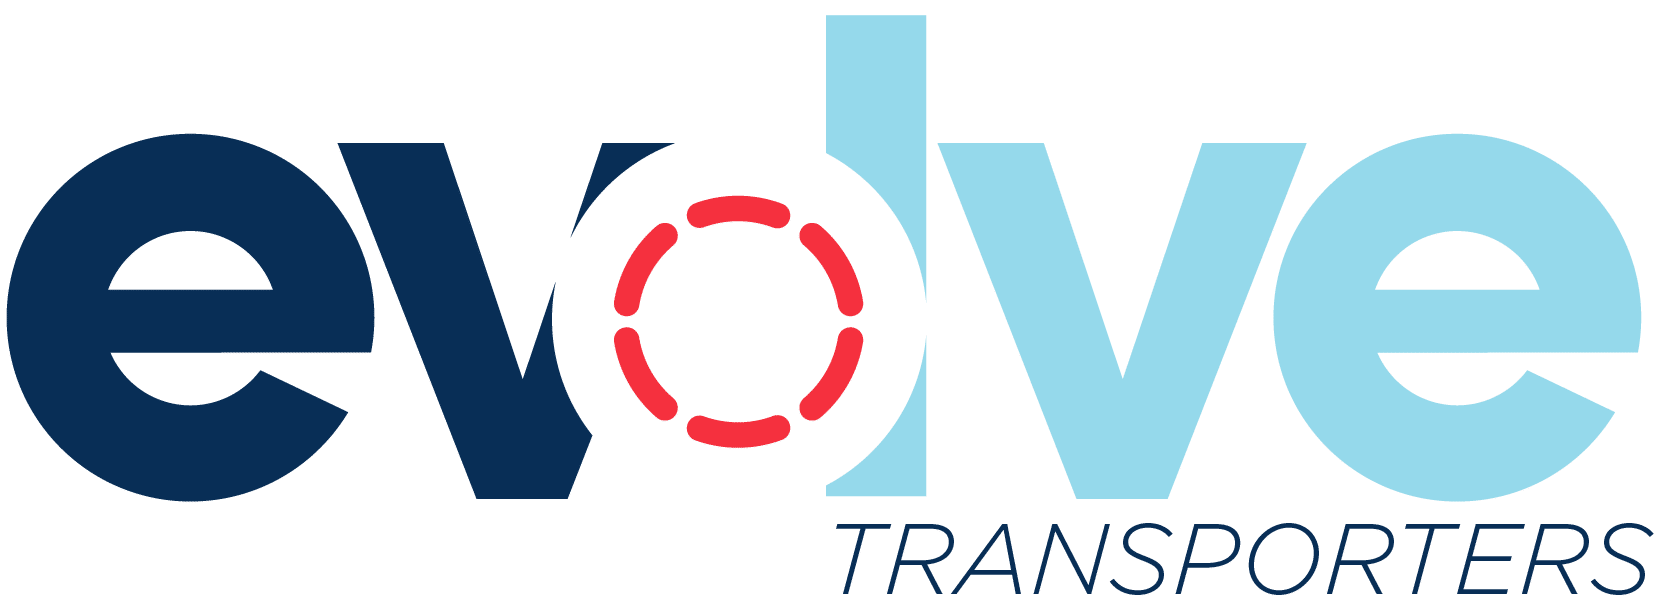 Evolve Transporters logo